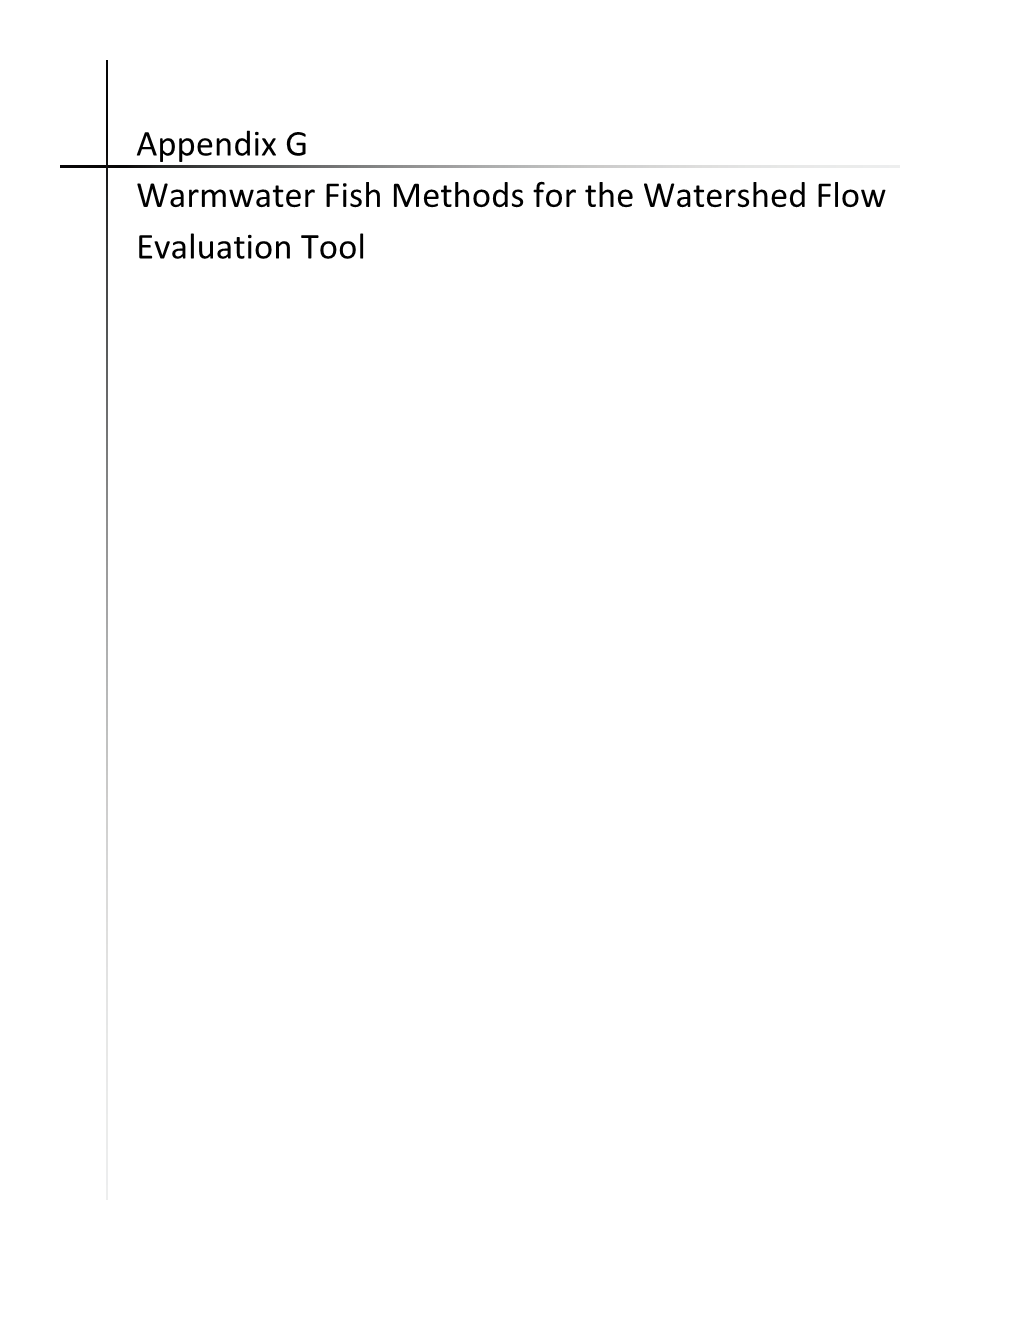 Appendix G. Warmwater Fish Methods